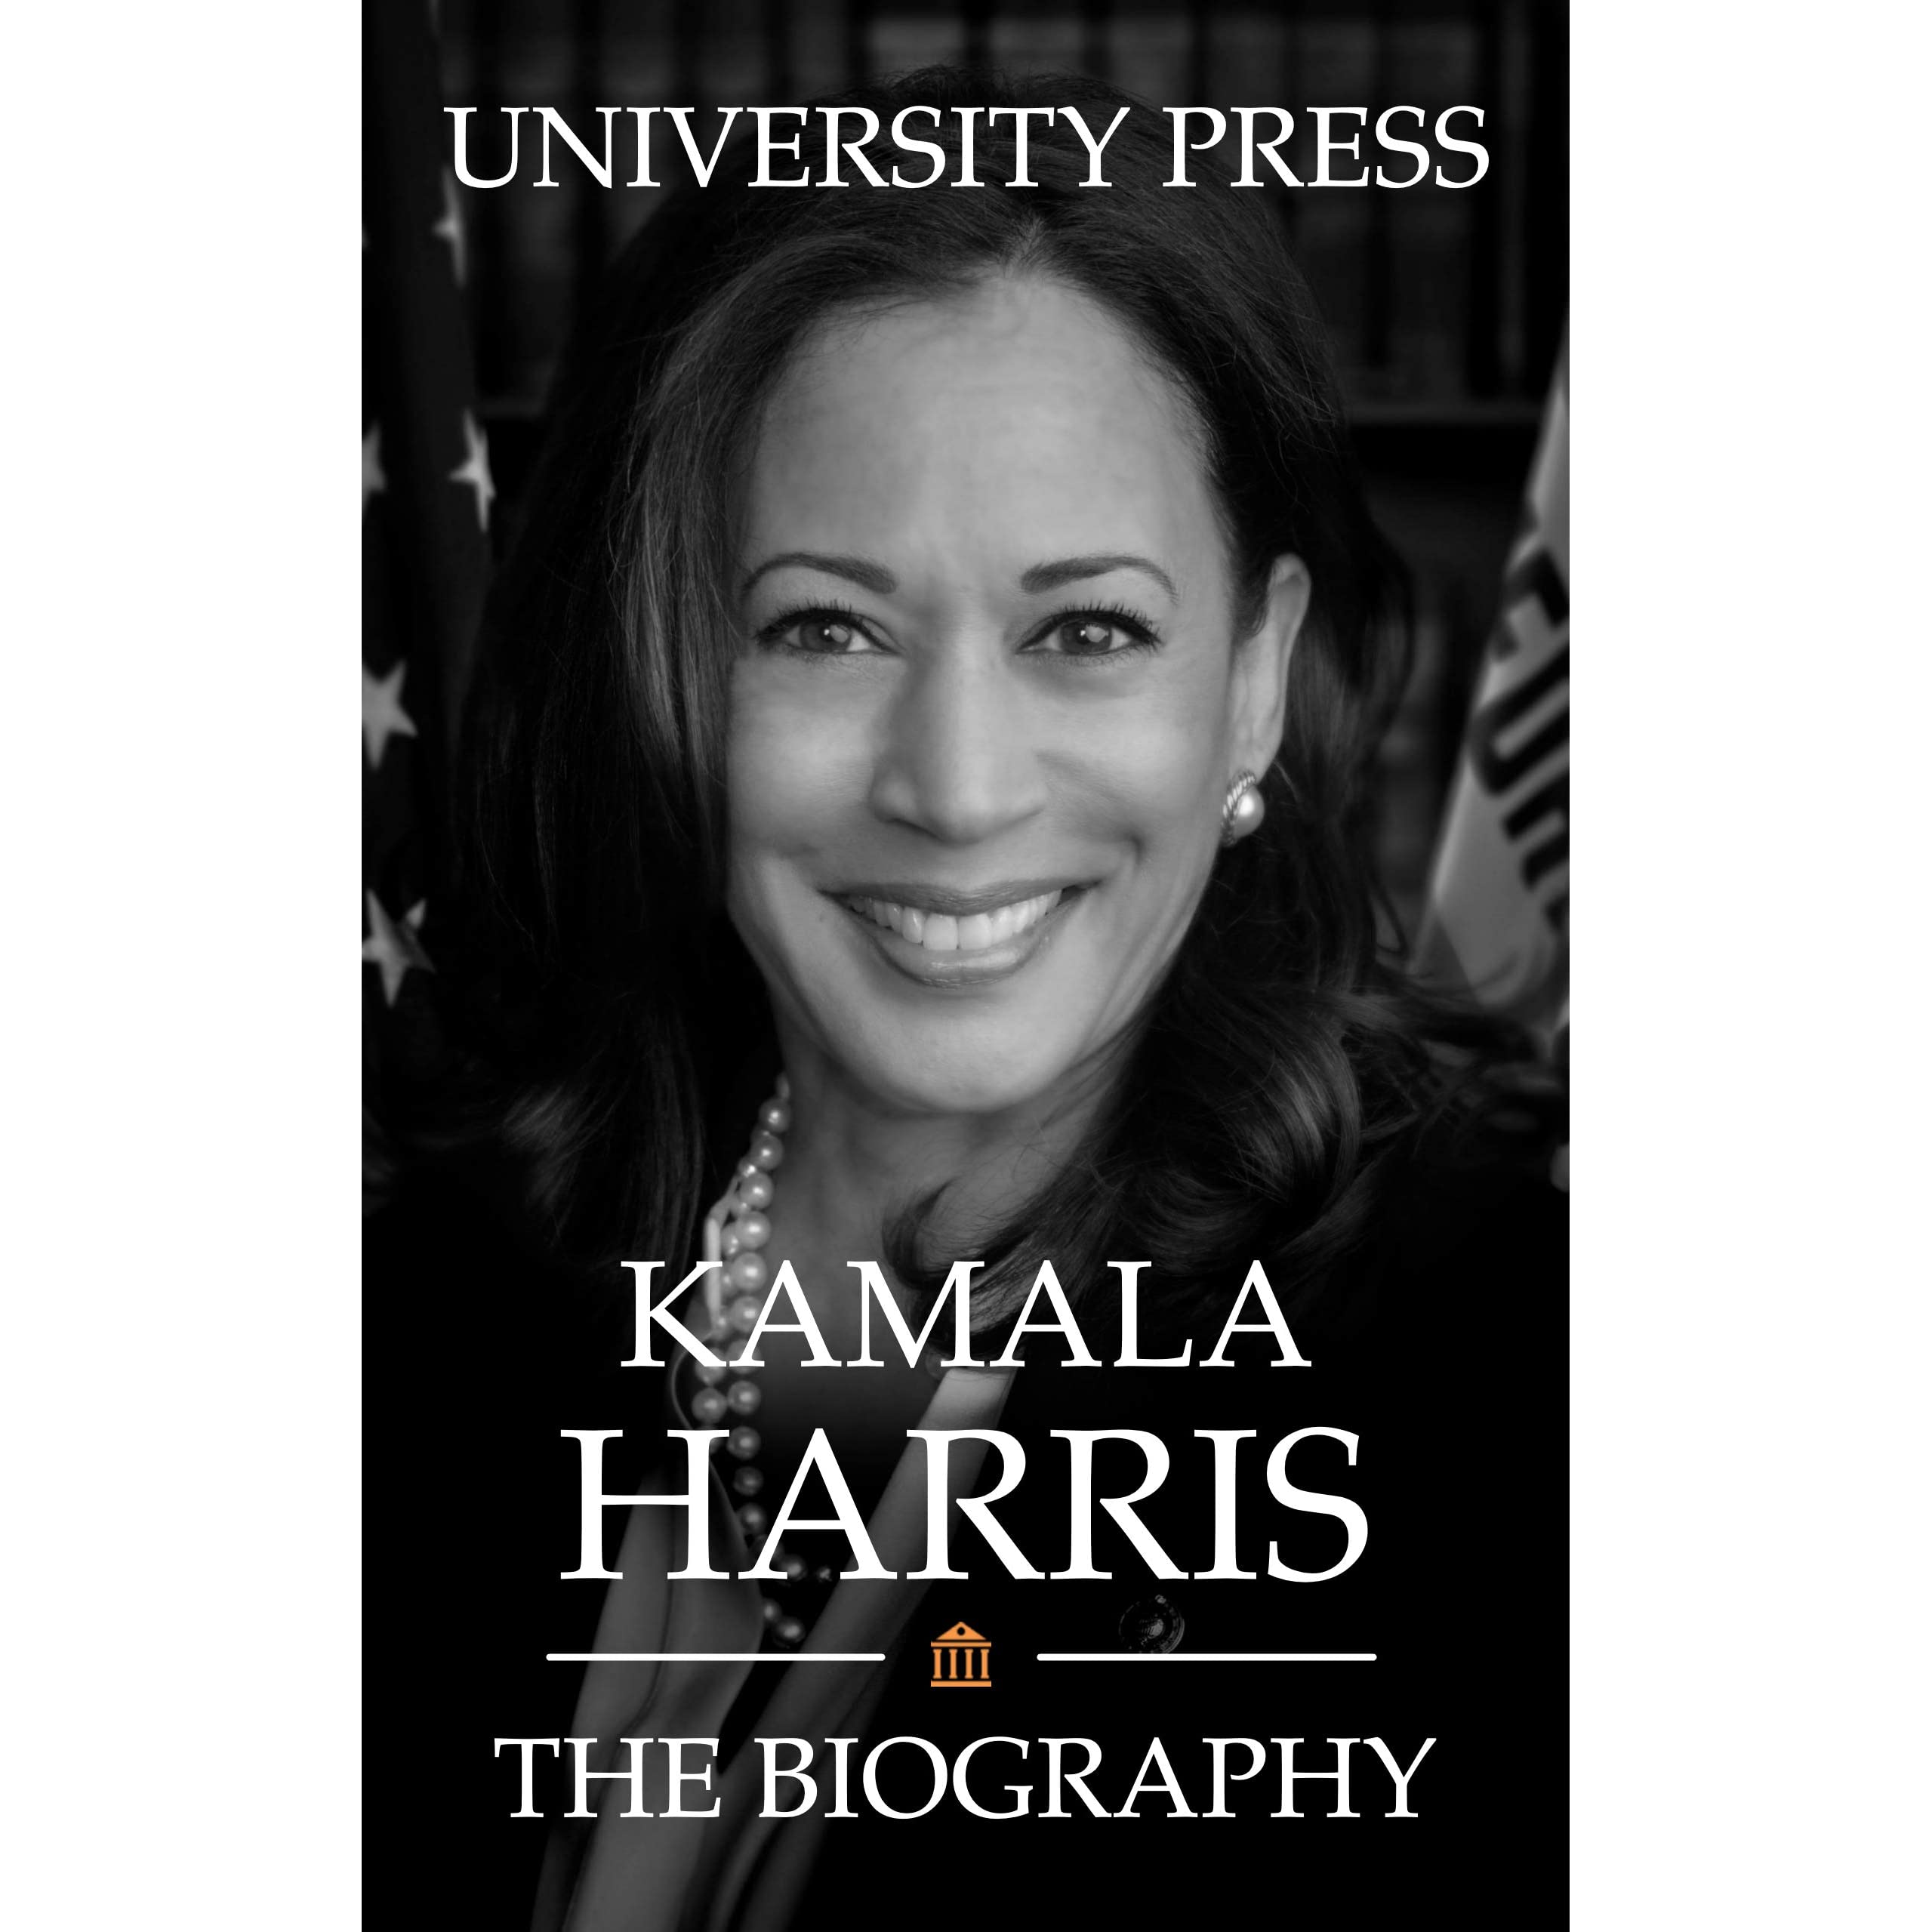 Kamala Harris: The Biography By University Press